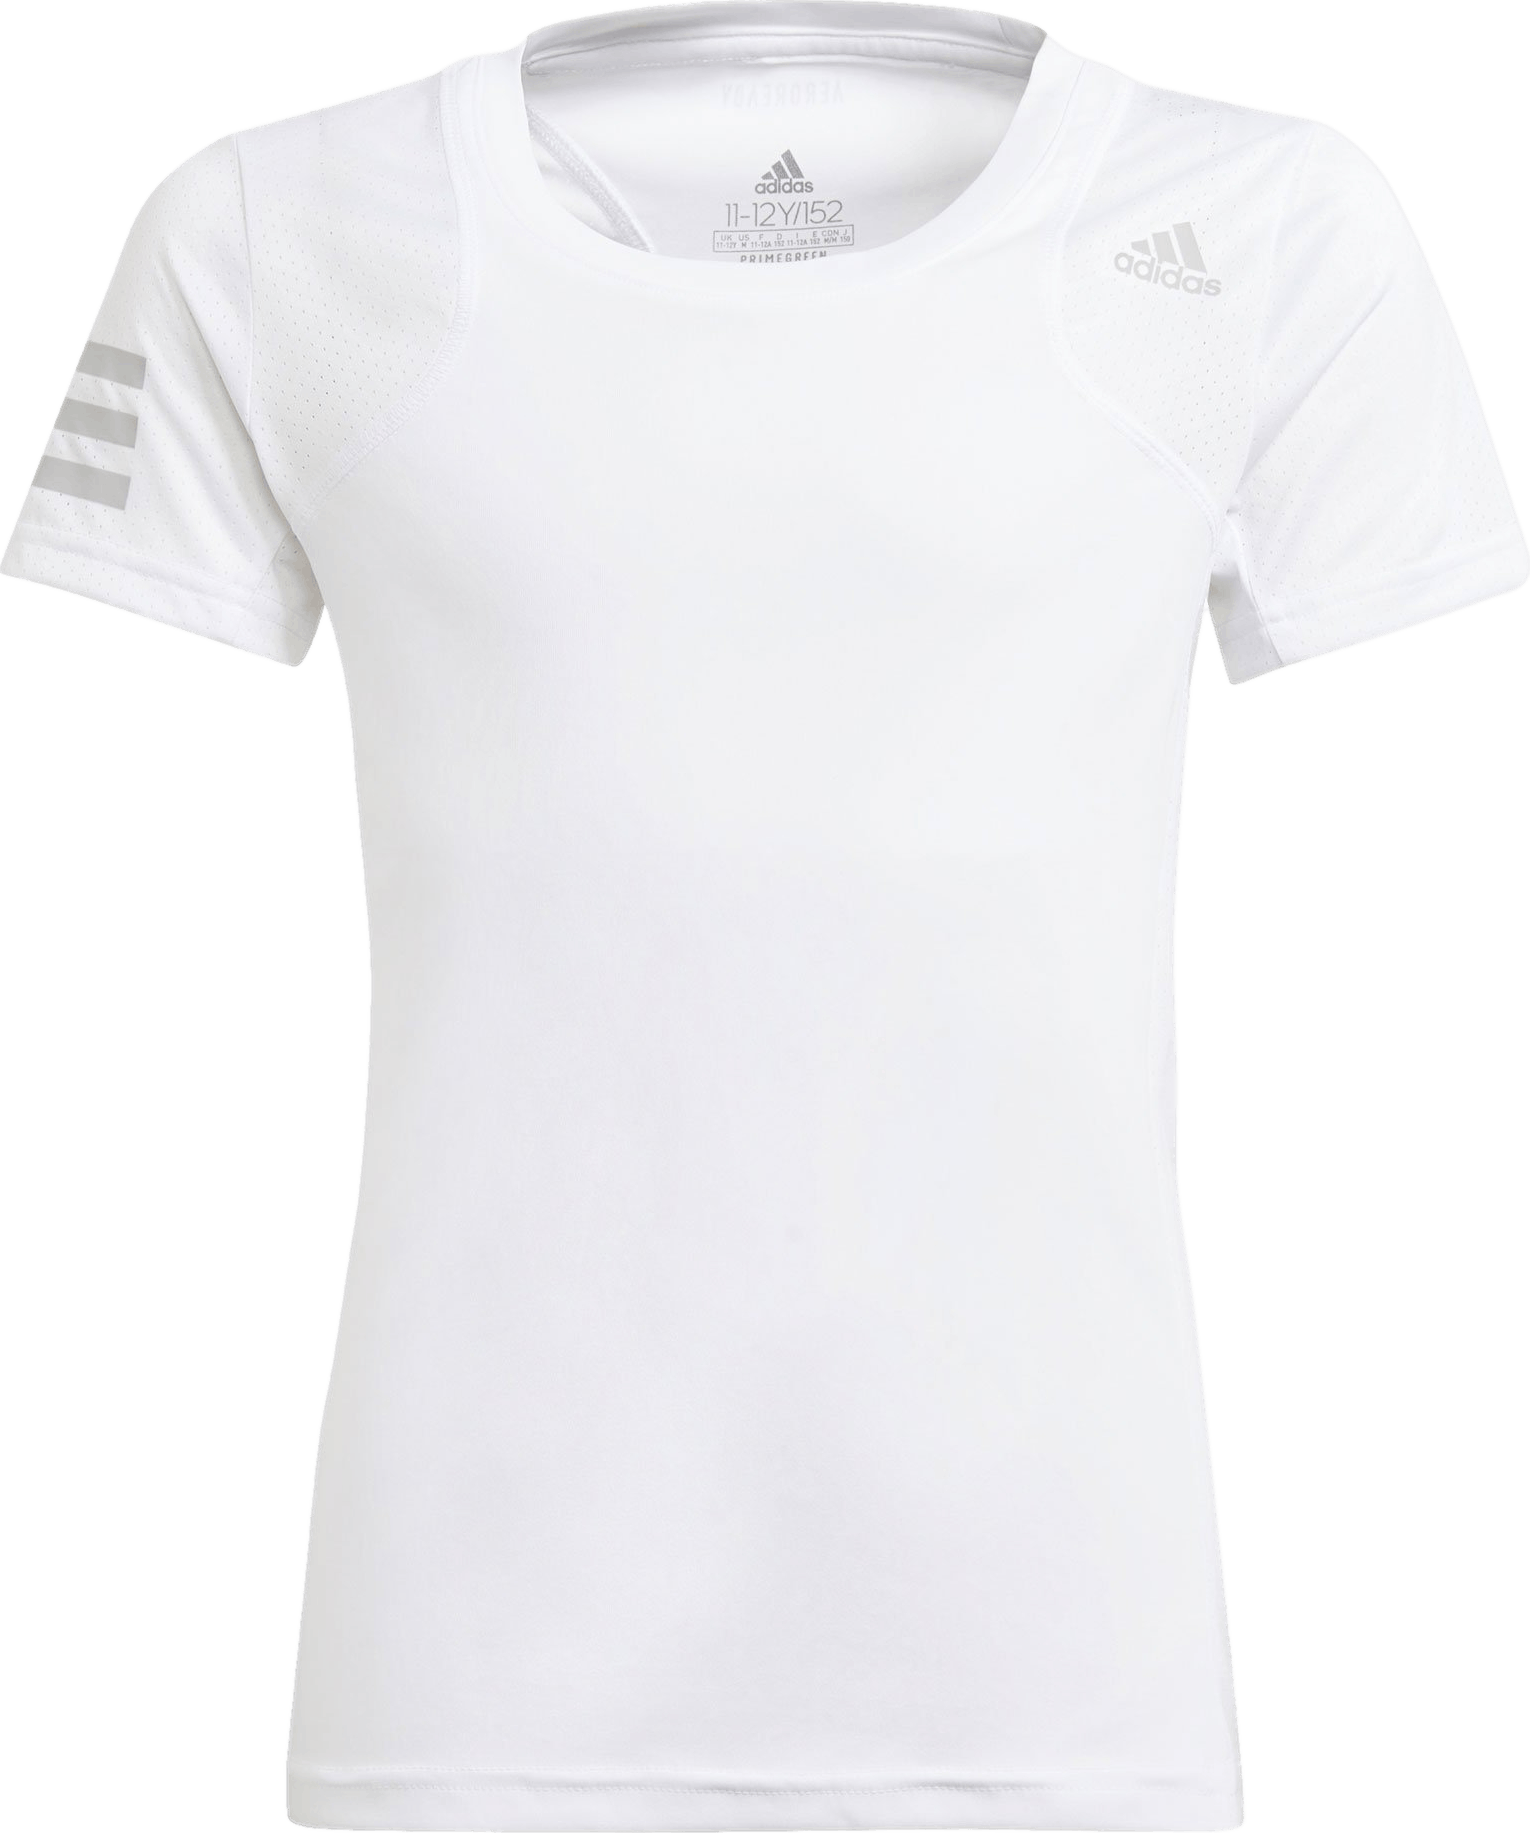 Adidas Girl's Club White-Grey Tennis Shirt